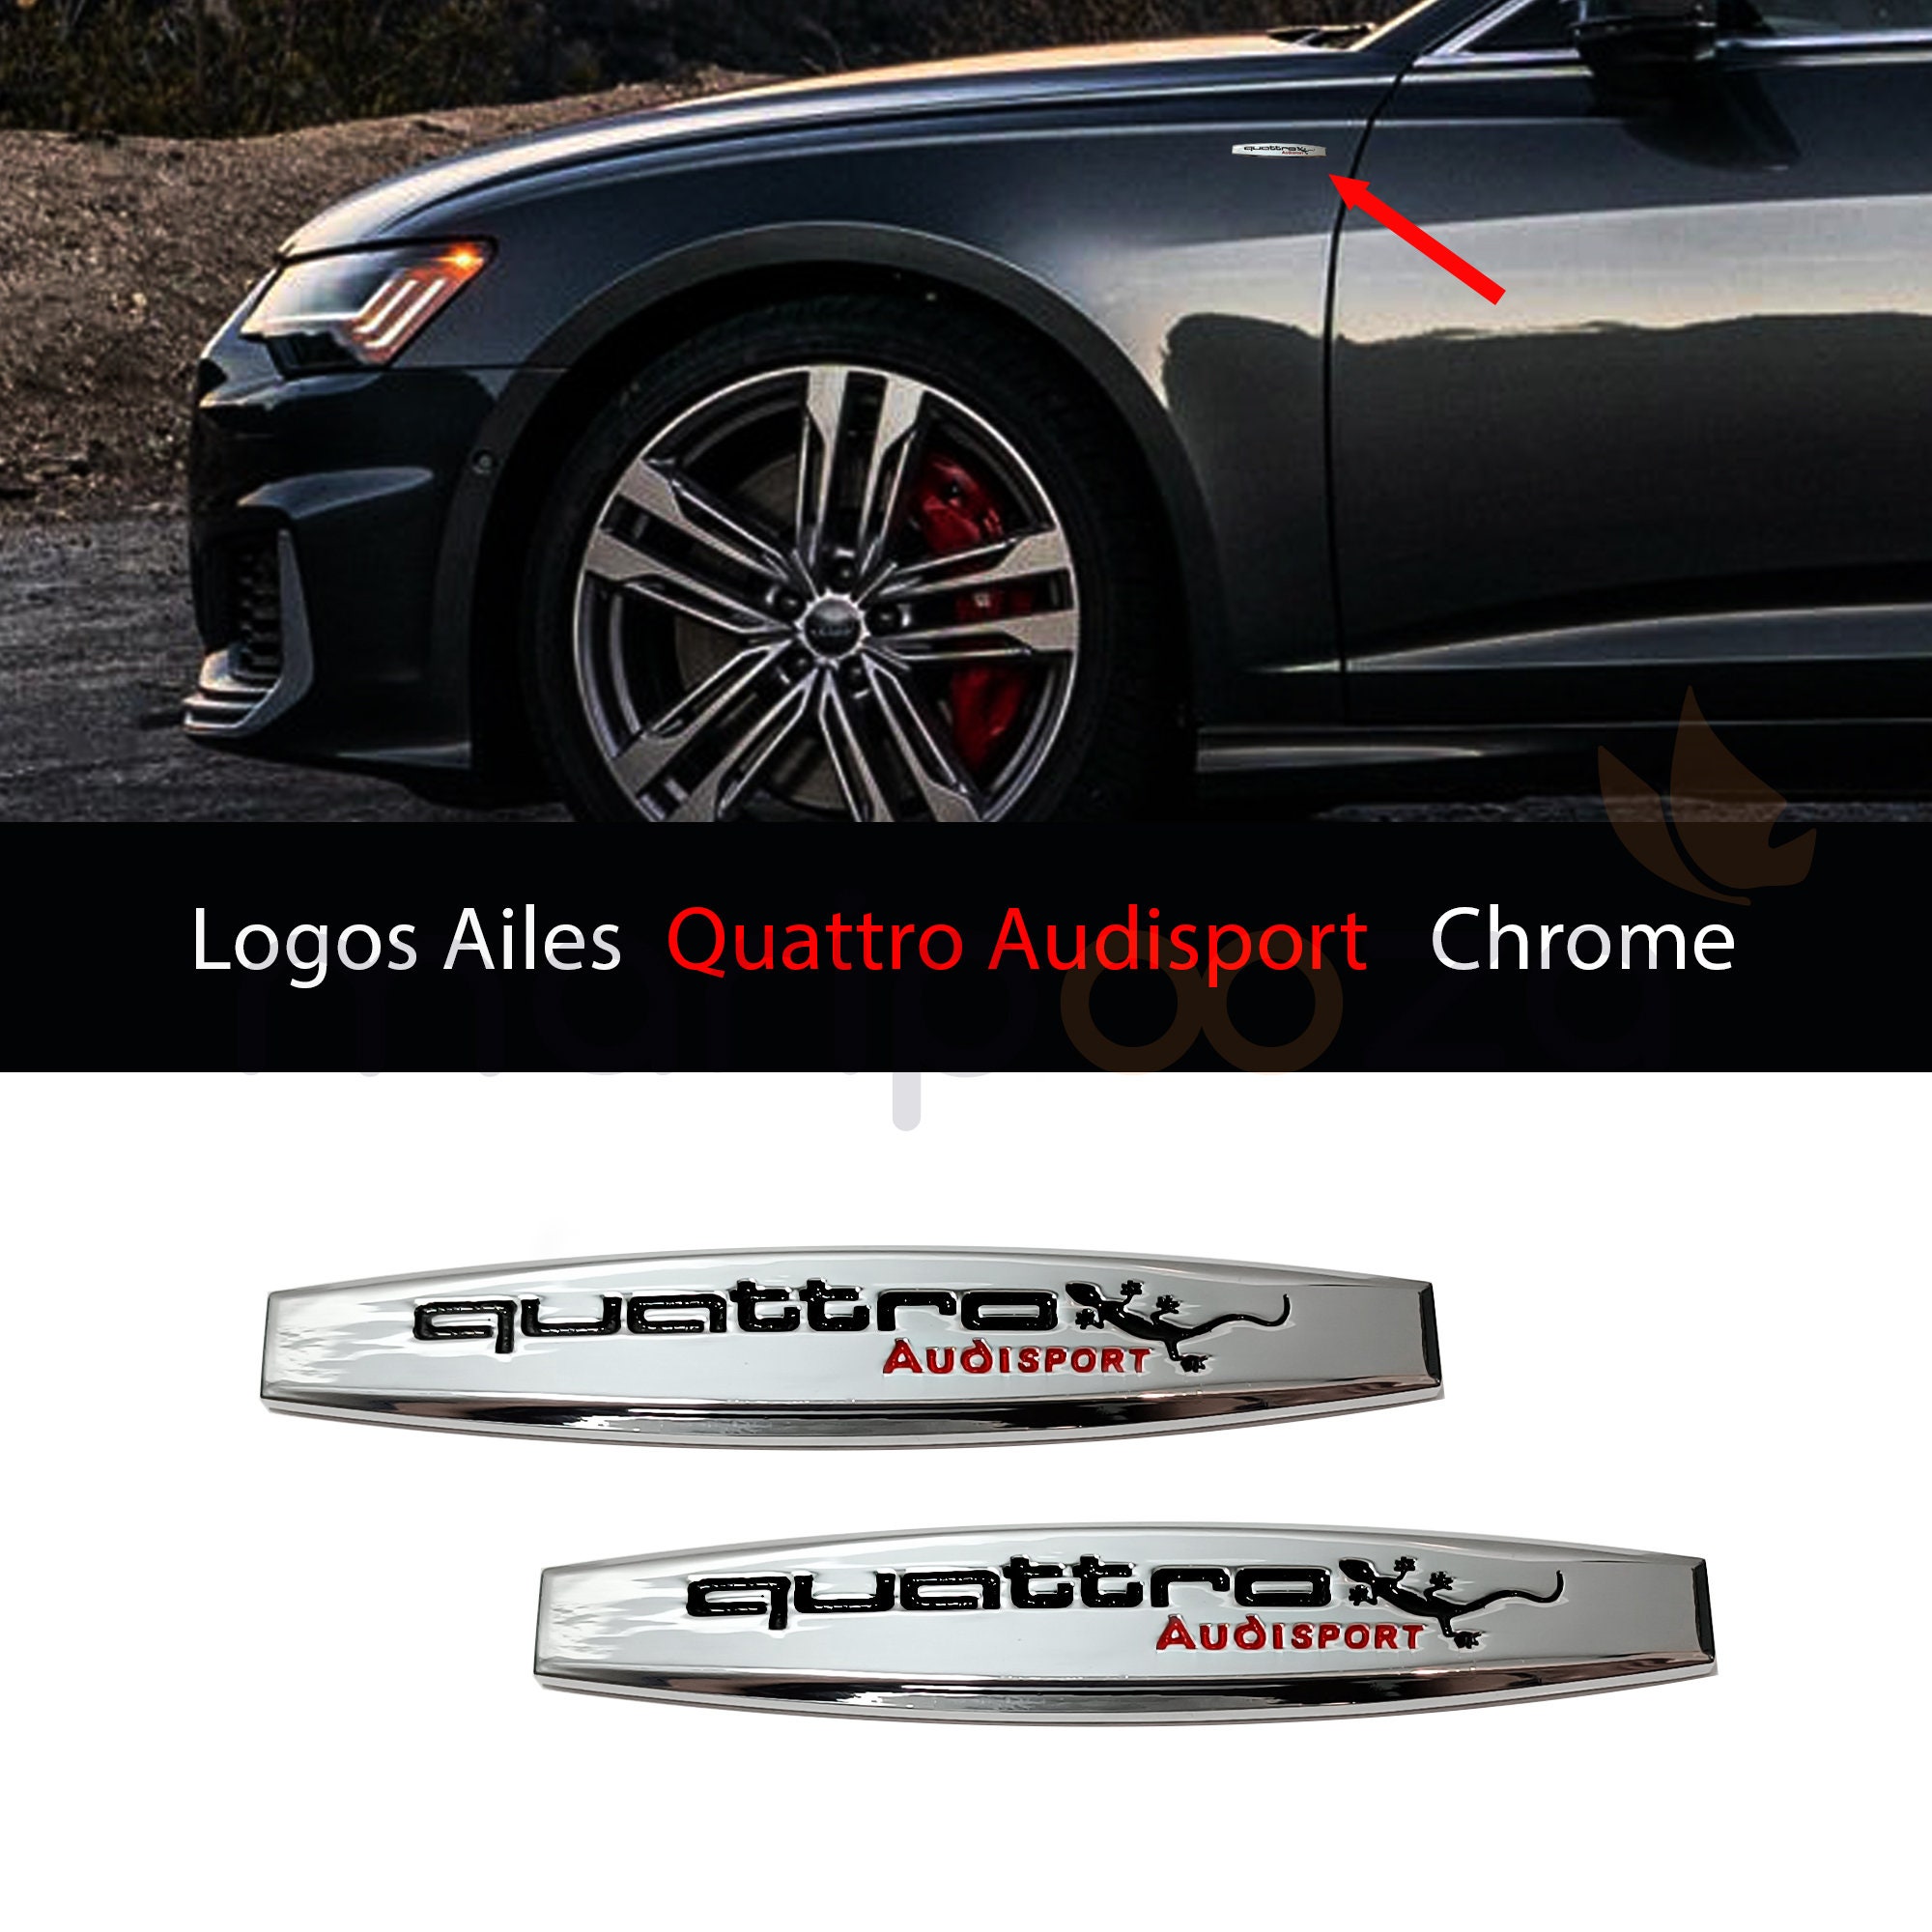 Audi Sport Sticker autocollant de coffre